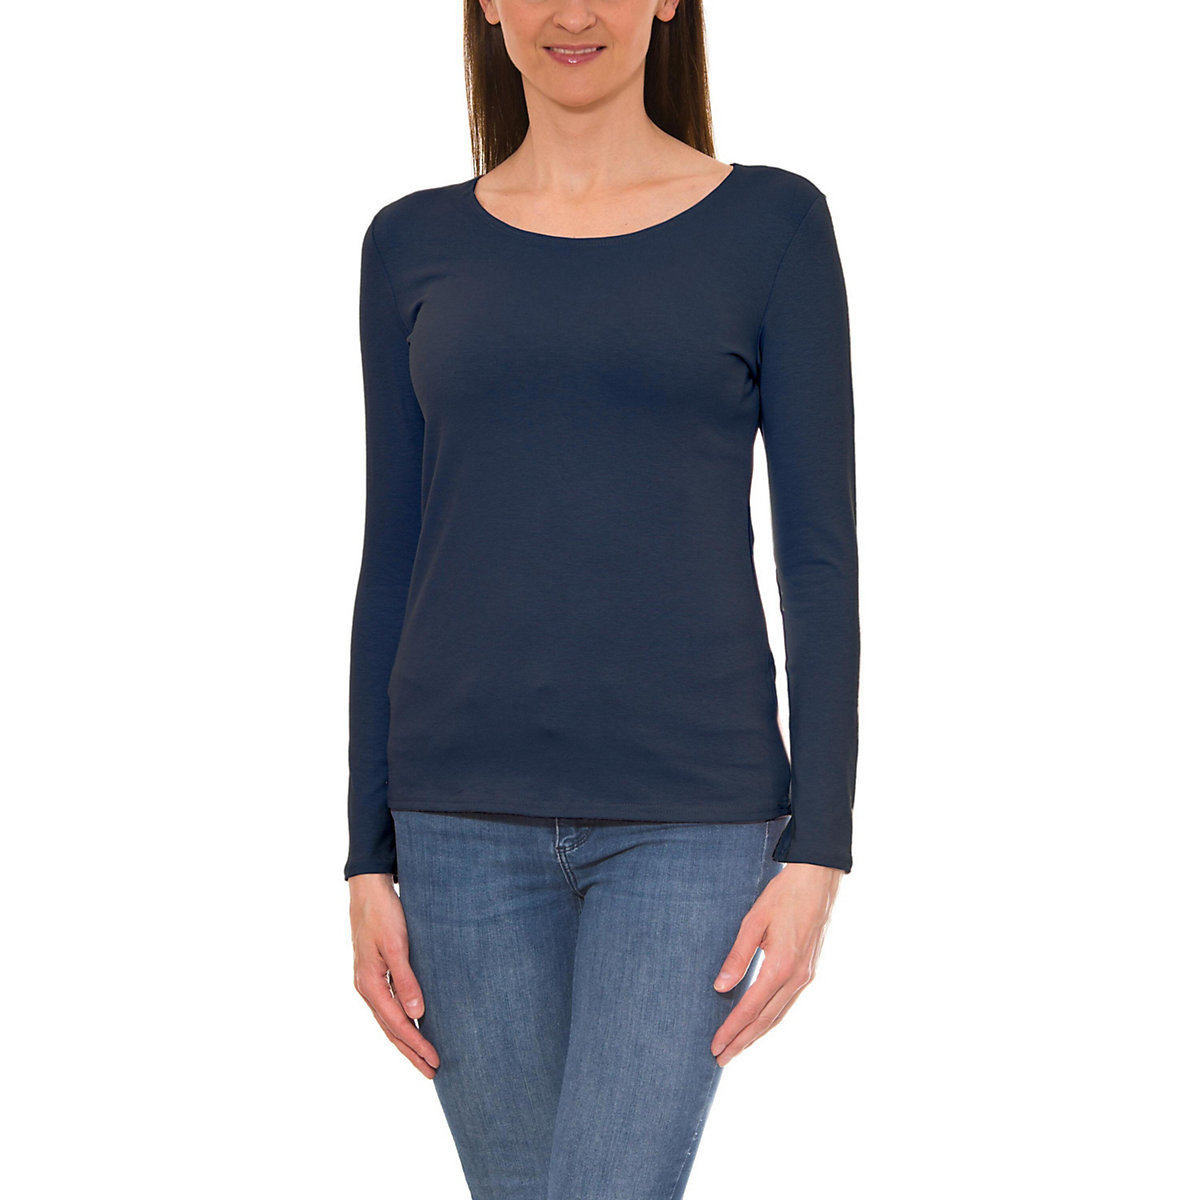 Alkato Damen Langarm Shirt mit O-Ausschnitt dunkelblau